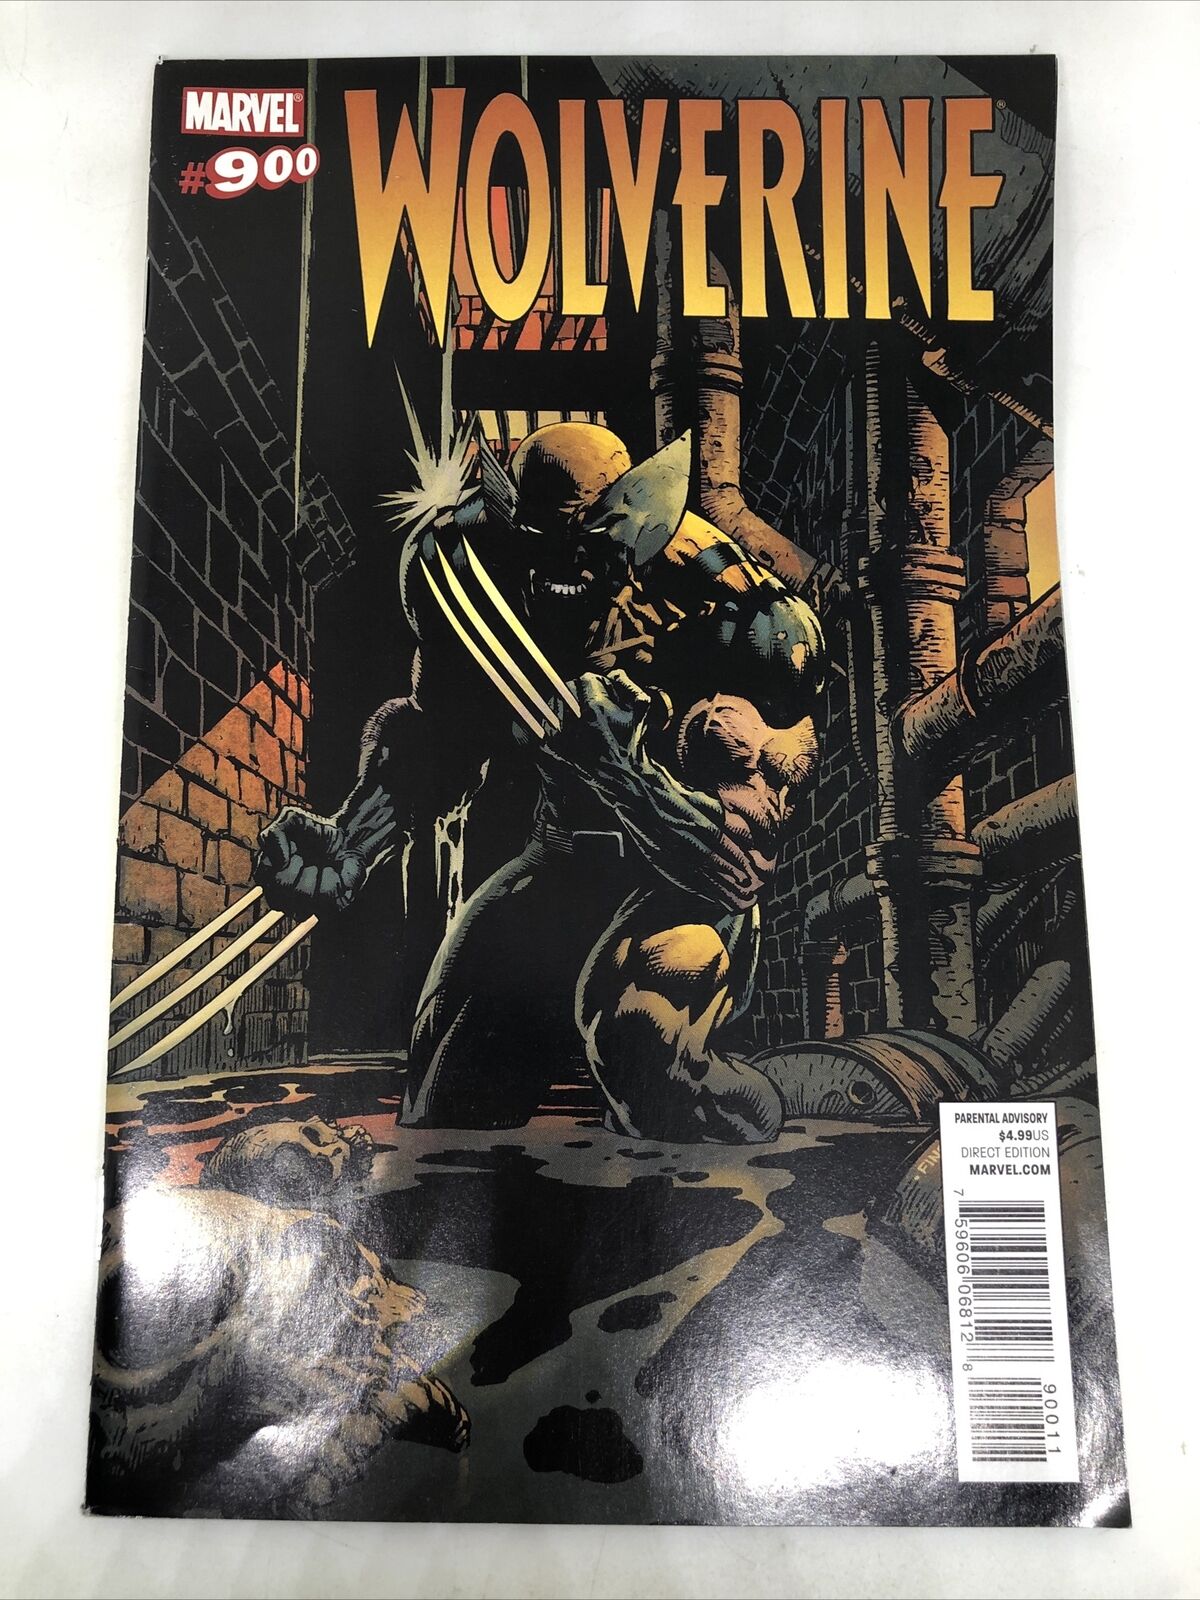 2009 Marvel Comics- Wolverine Special Edition #900